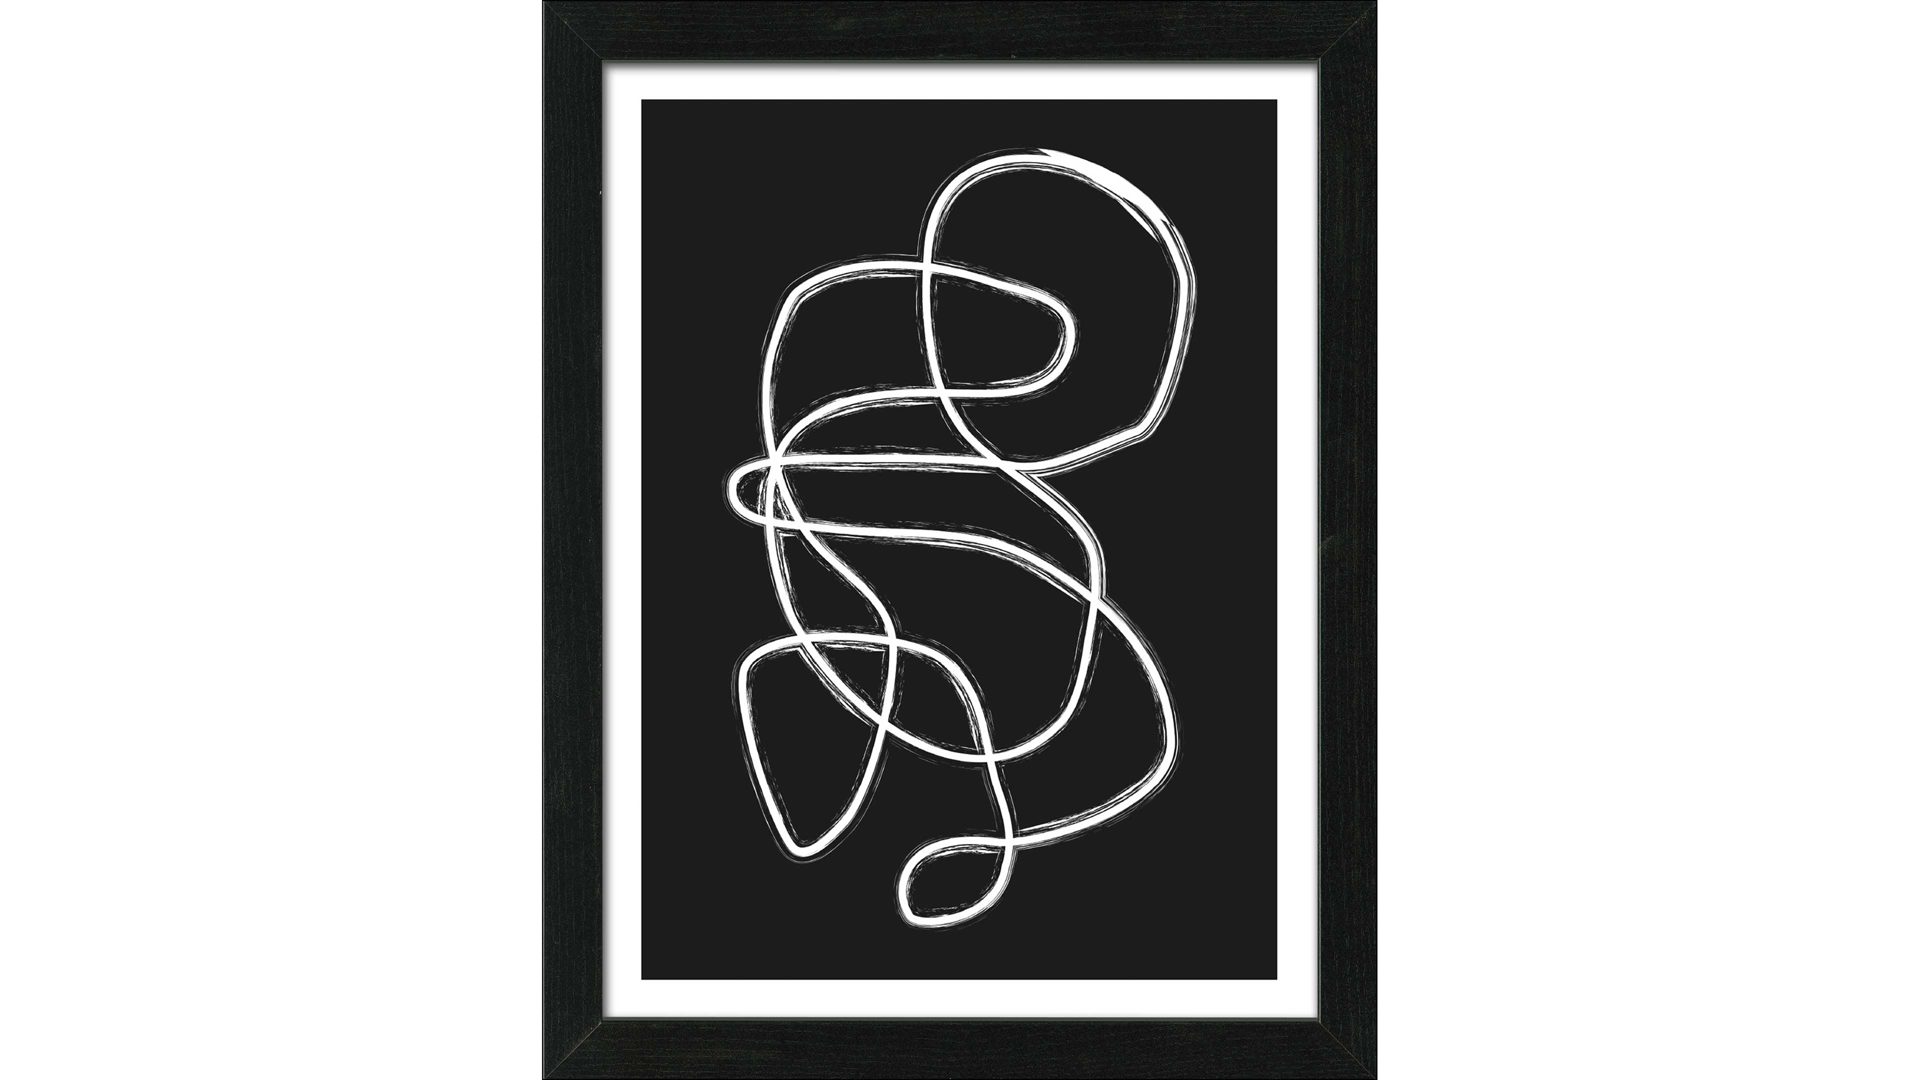 Kunstdruck Interliving BEST BUDDYS! aus Karton / Papier / Pappe in Weiß Interliving BEST BUDDYS!  Kunstdruck Scandic Living Lines and shapes I - ca. 35 x 45 cm